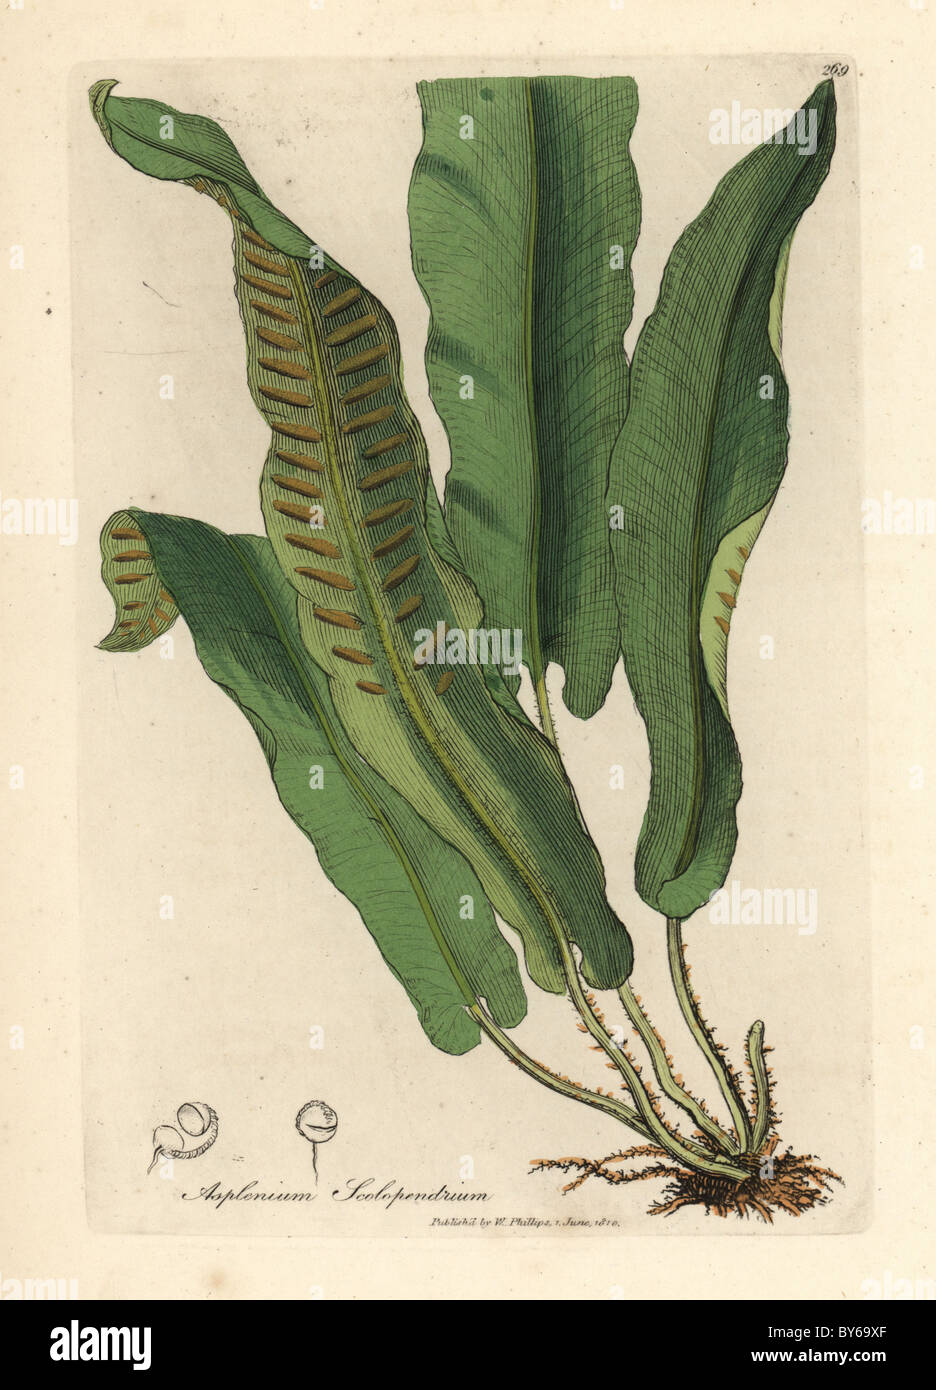 Harts-tongue fern, Asplenium scolopendrium. Stock Photo